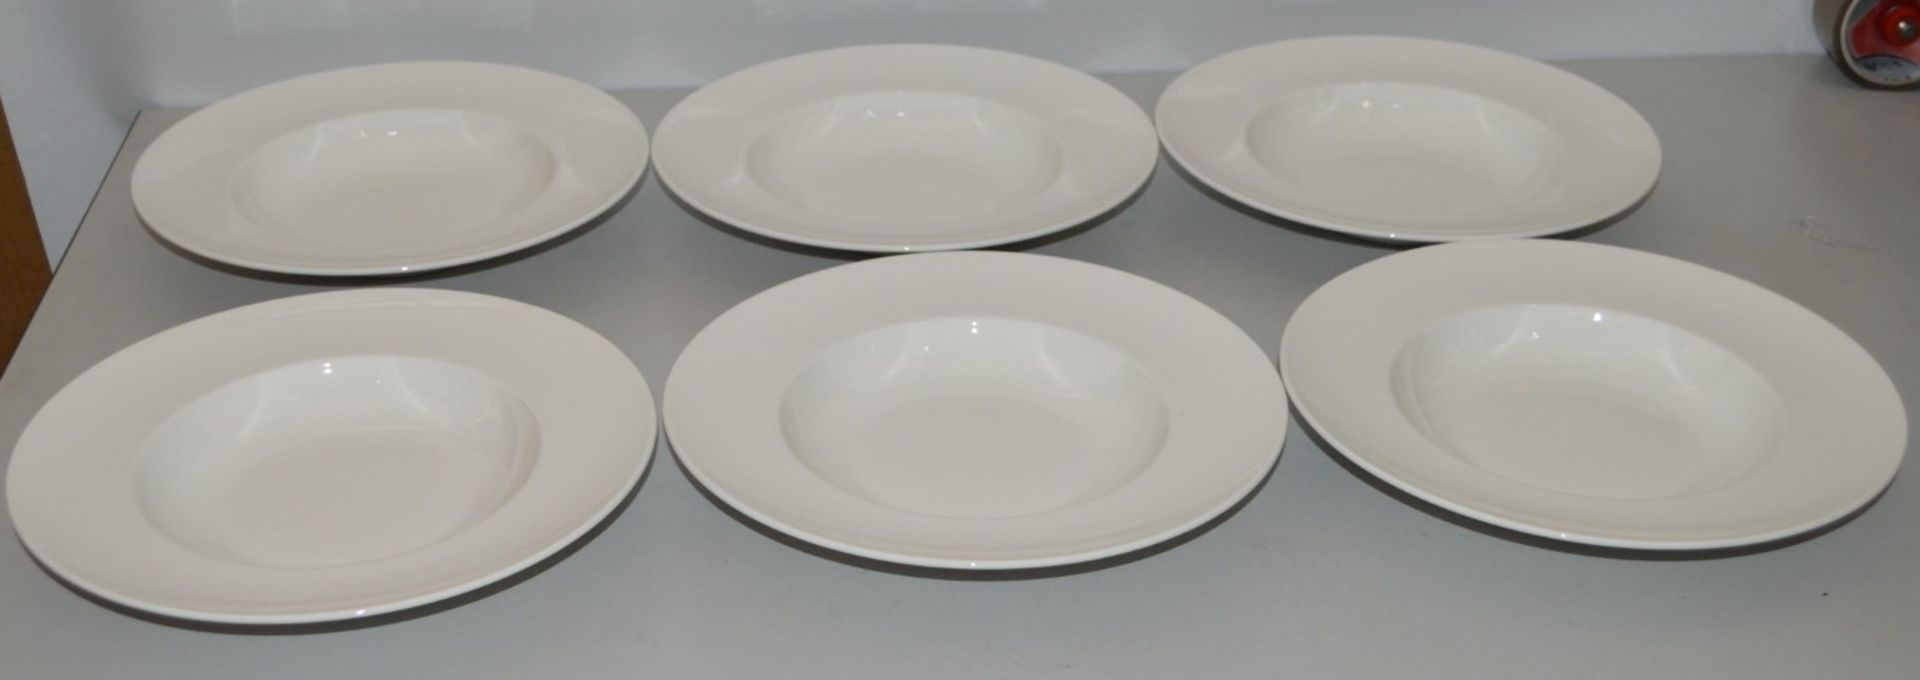 2 x Villeroy & Boch Universal Pasta Plate (0.6L) White 6 x Plates Unused Box 16-2040-2790 W300mm (RR - Image 2 of 3